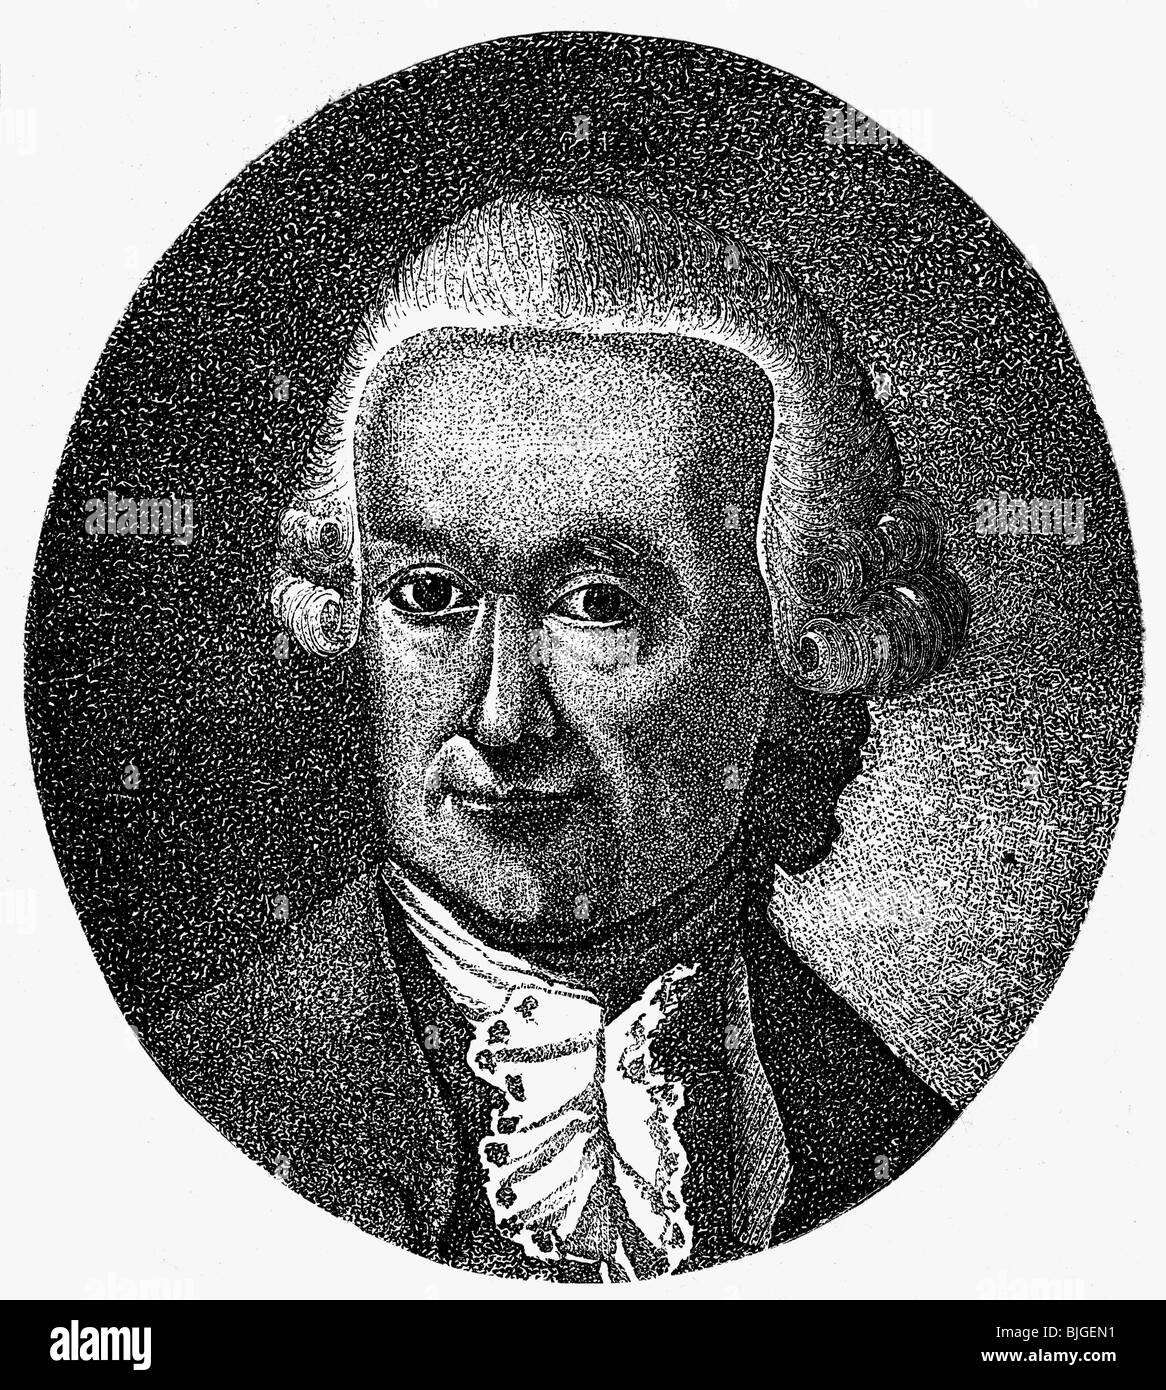 Bach, <b>Wilhelm Friedemann</b>, 22.11.1710 - 1.7.1784, German composer, - bach-wilhelm-friedemann-22111710-171784-german-composer-portrait-wood-BJGEN1